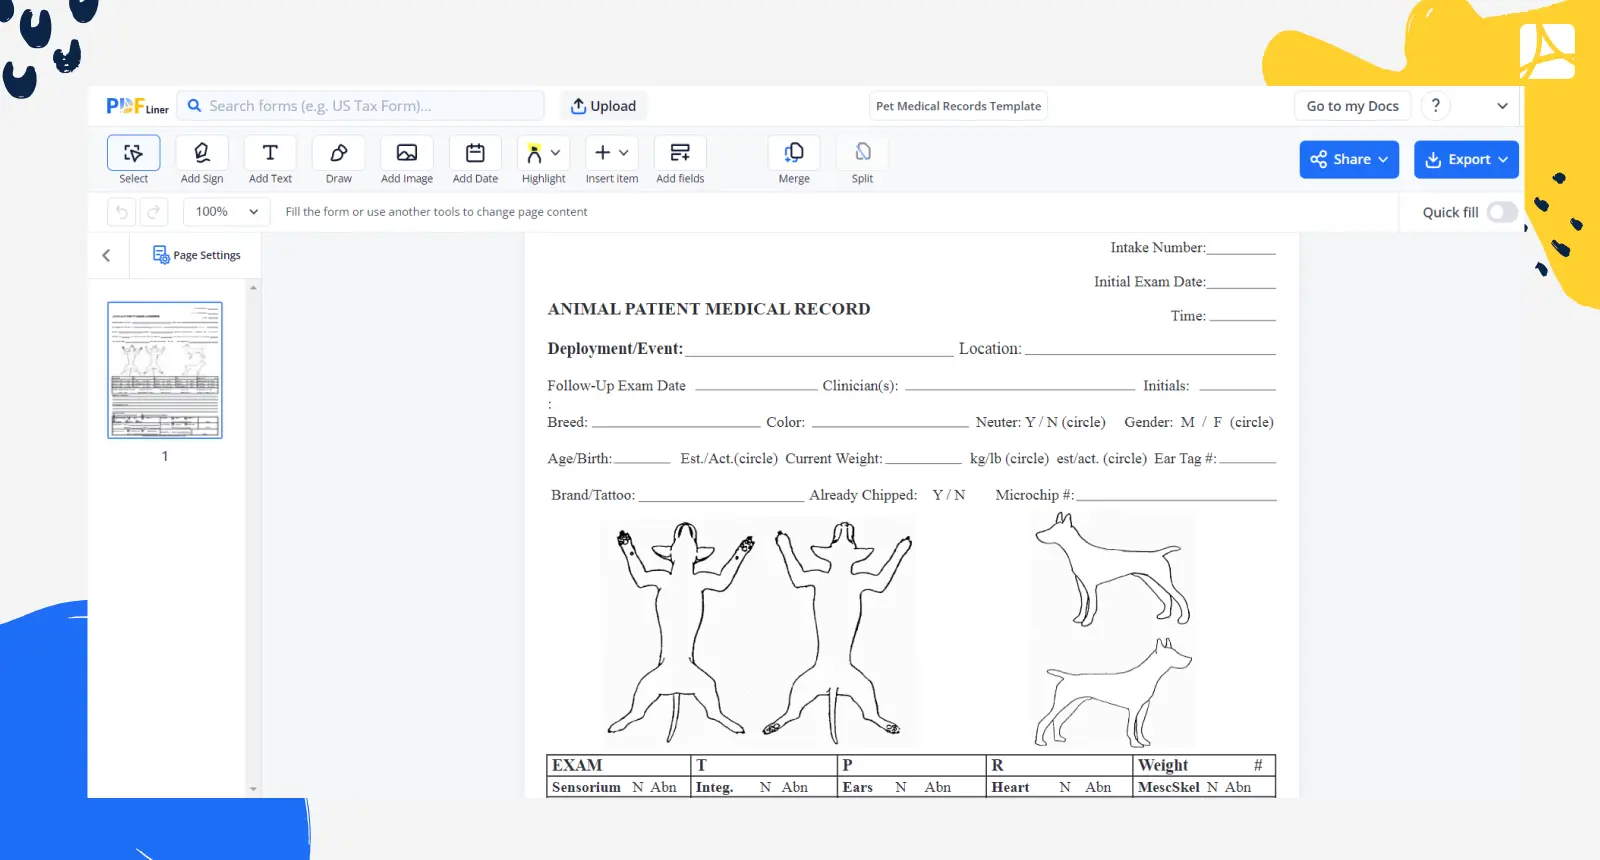 Pet Medical Records Template Screenshot